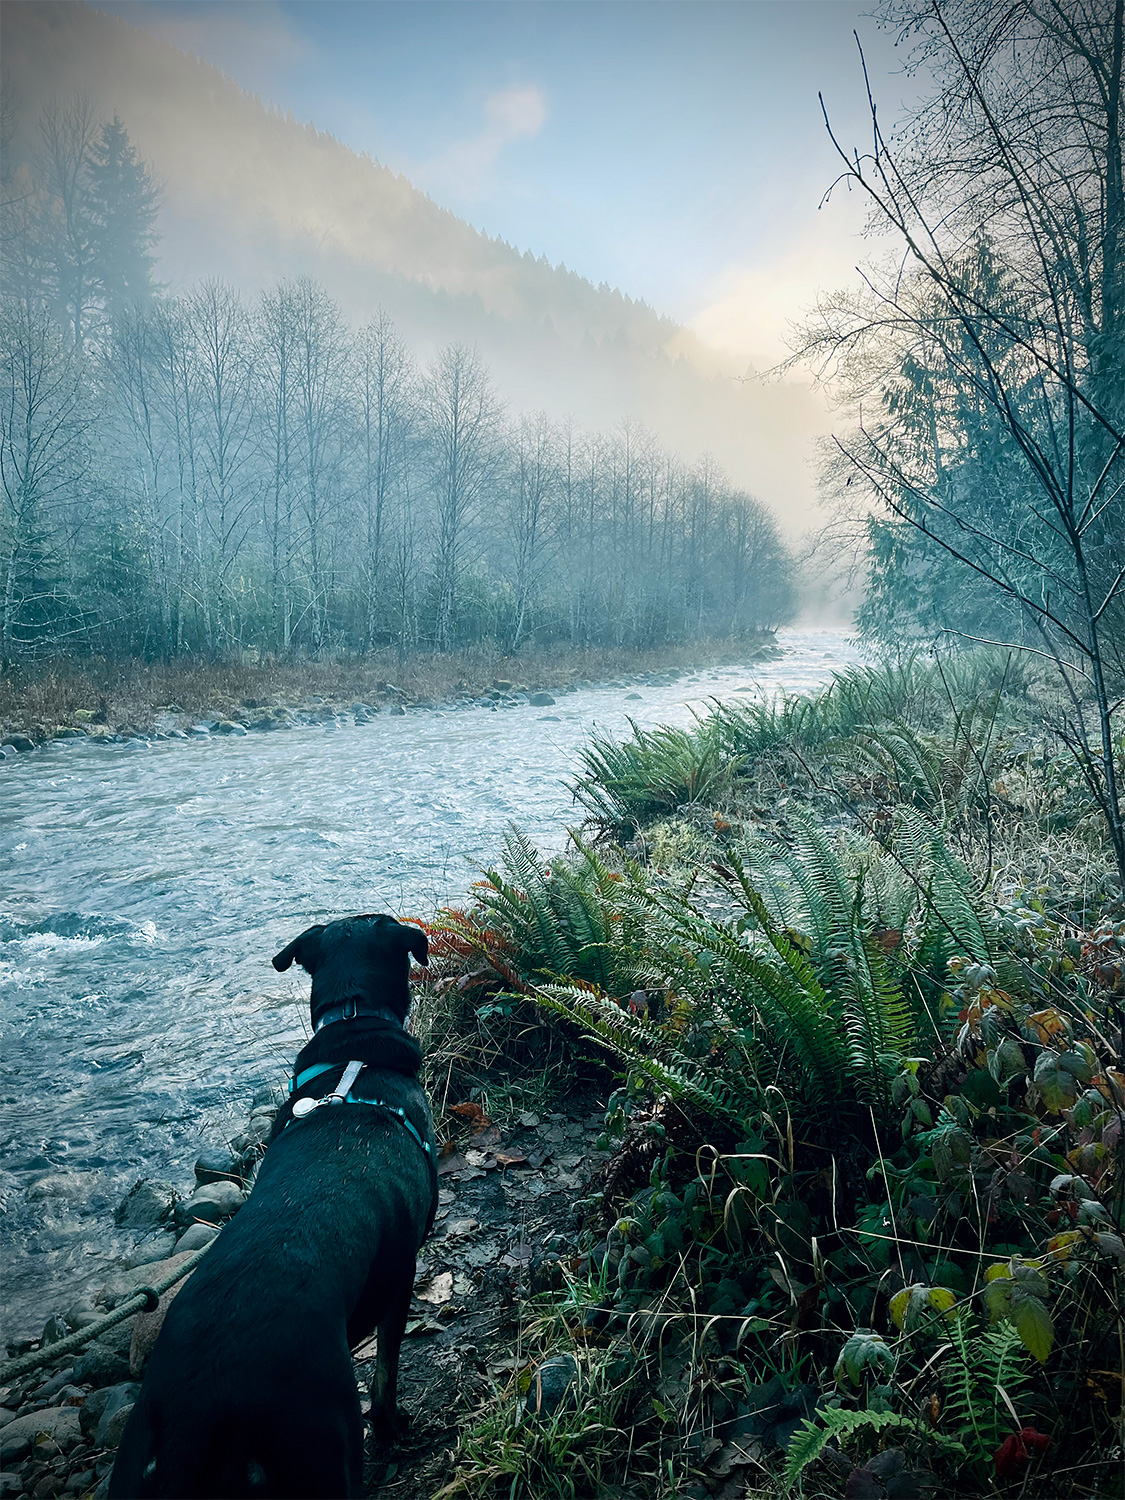 A black dog surveys the misty horizon